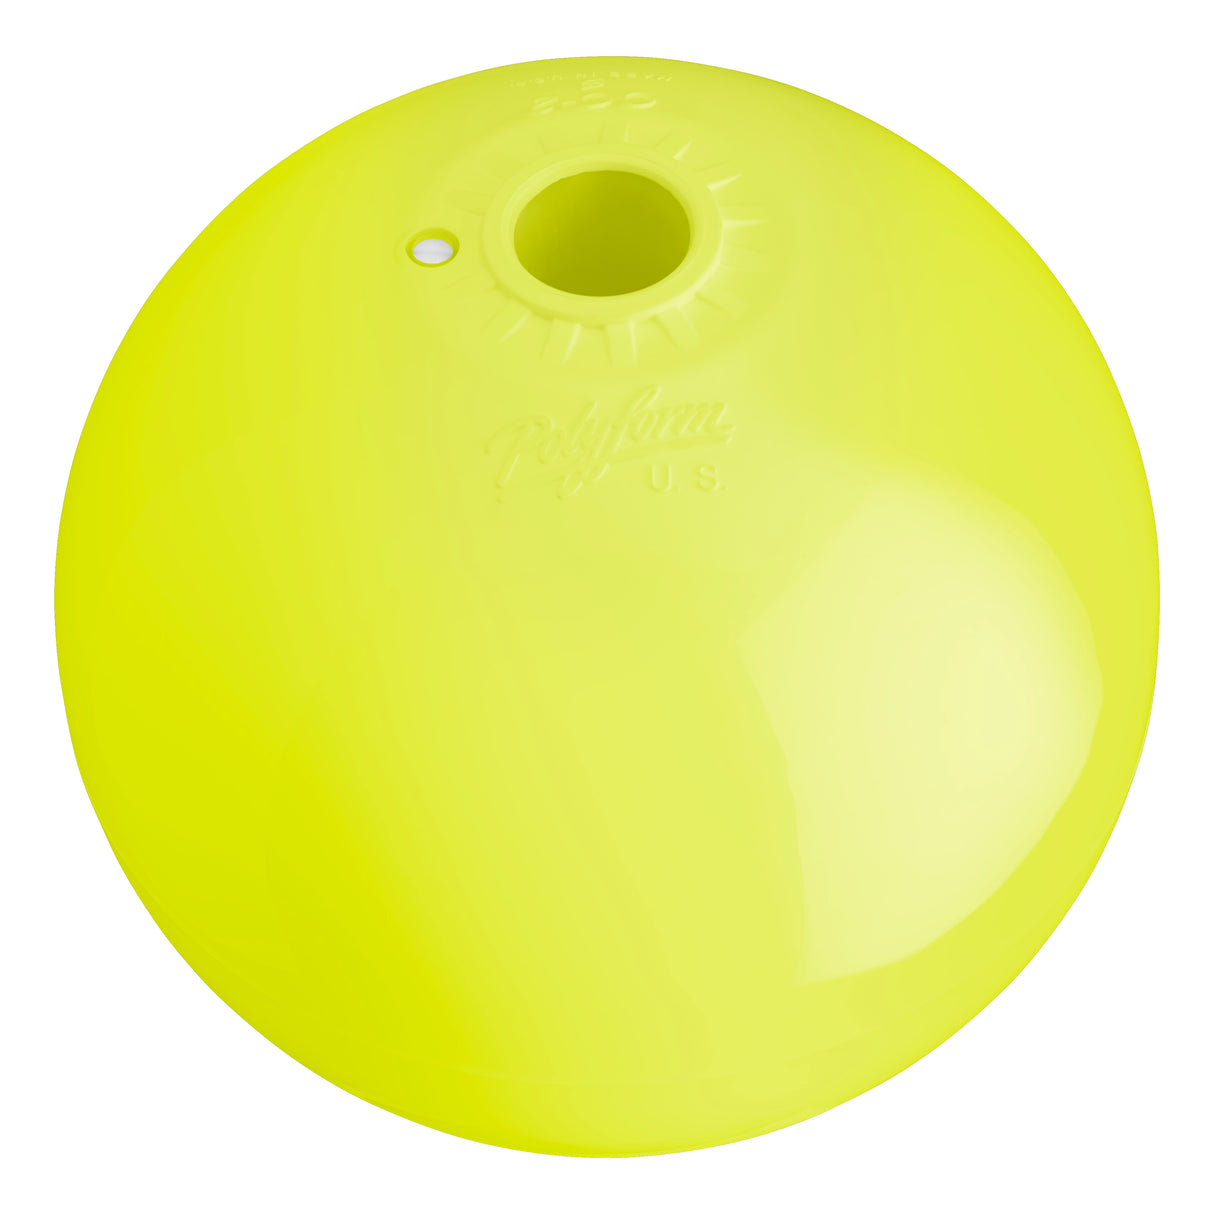 Hole through center mooring and marker buoy, Polyform CC-5 Saturn Yellow angled shot